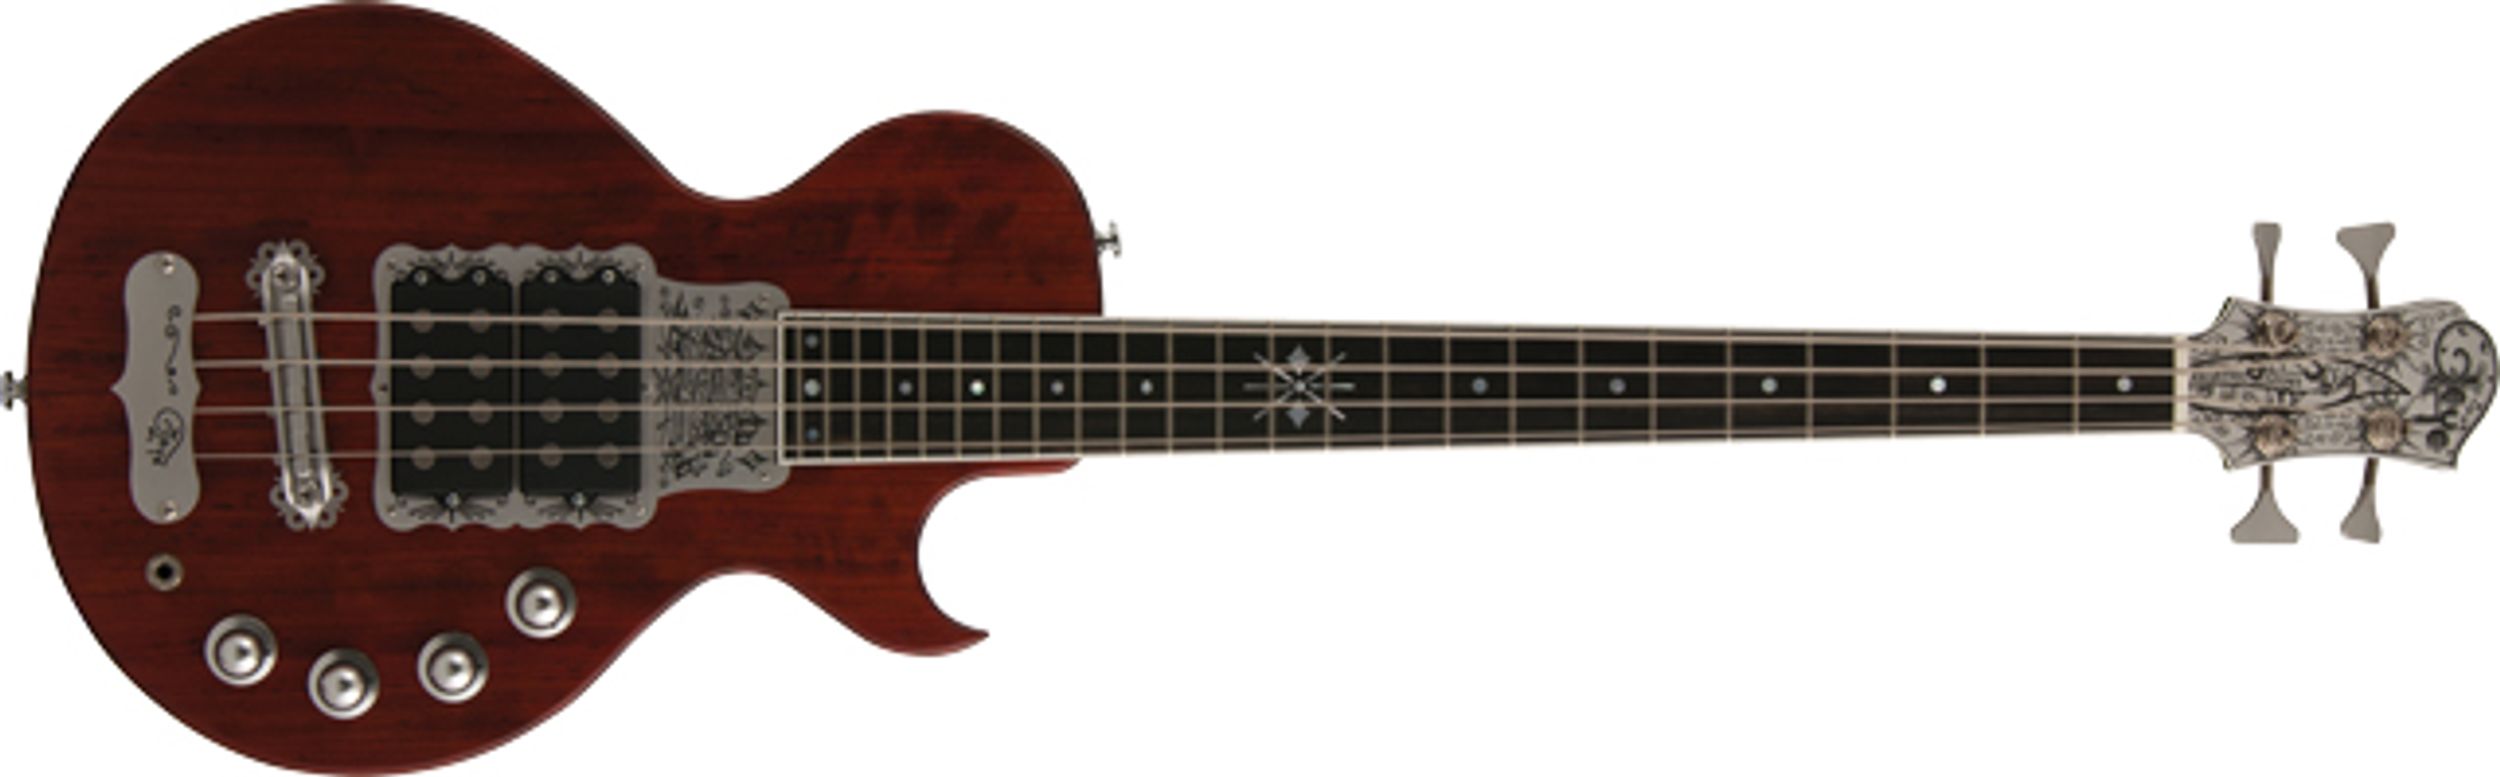 Teye Guitars R-Series La Gitana Bass Review